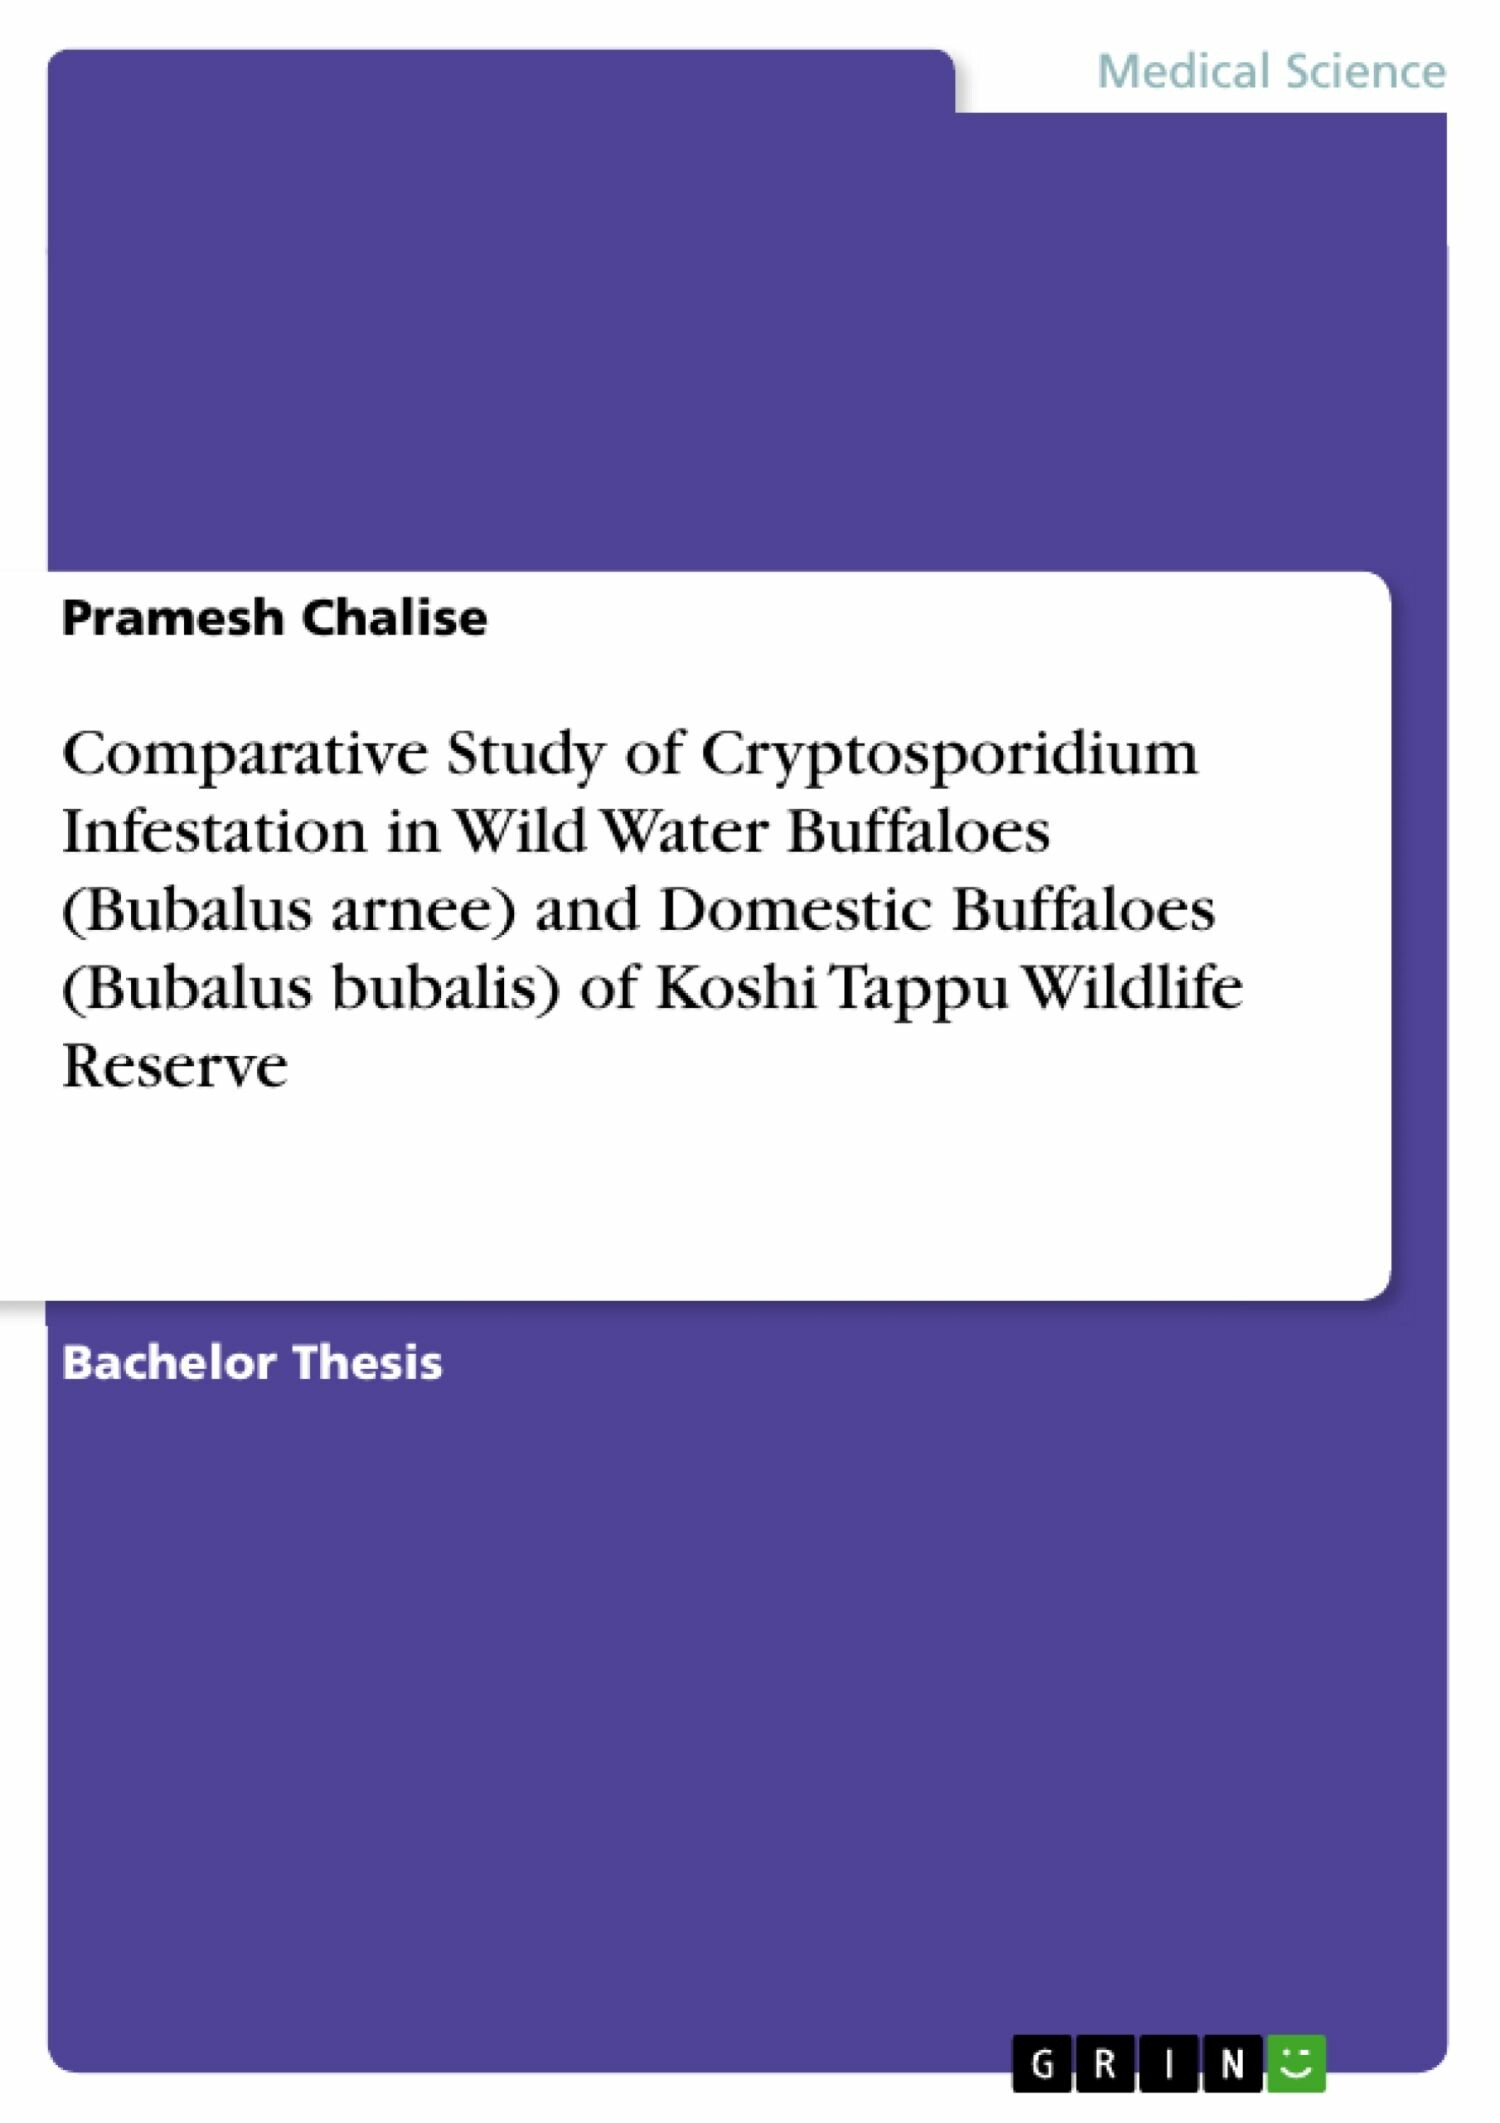 Comparative Study of Cryptosporidium Infestation  in Wild Water Buffaloes (Bubalus arnee) and  Domestic Buffaloes (Bubalus bubalis) of  Koshi Tappu Wildlife Reserve